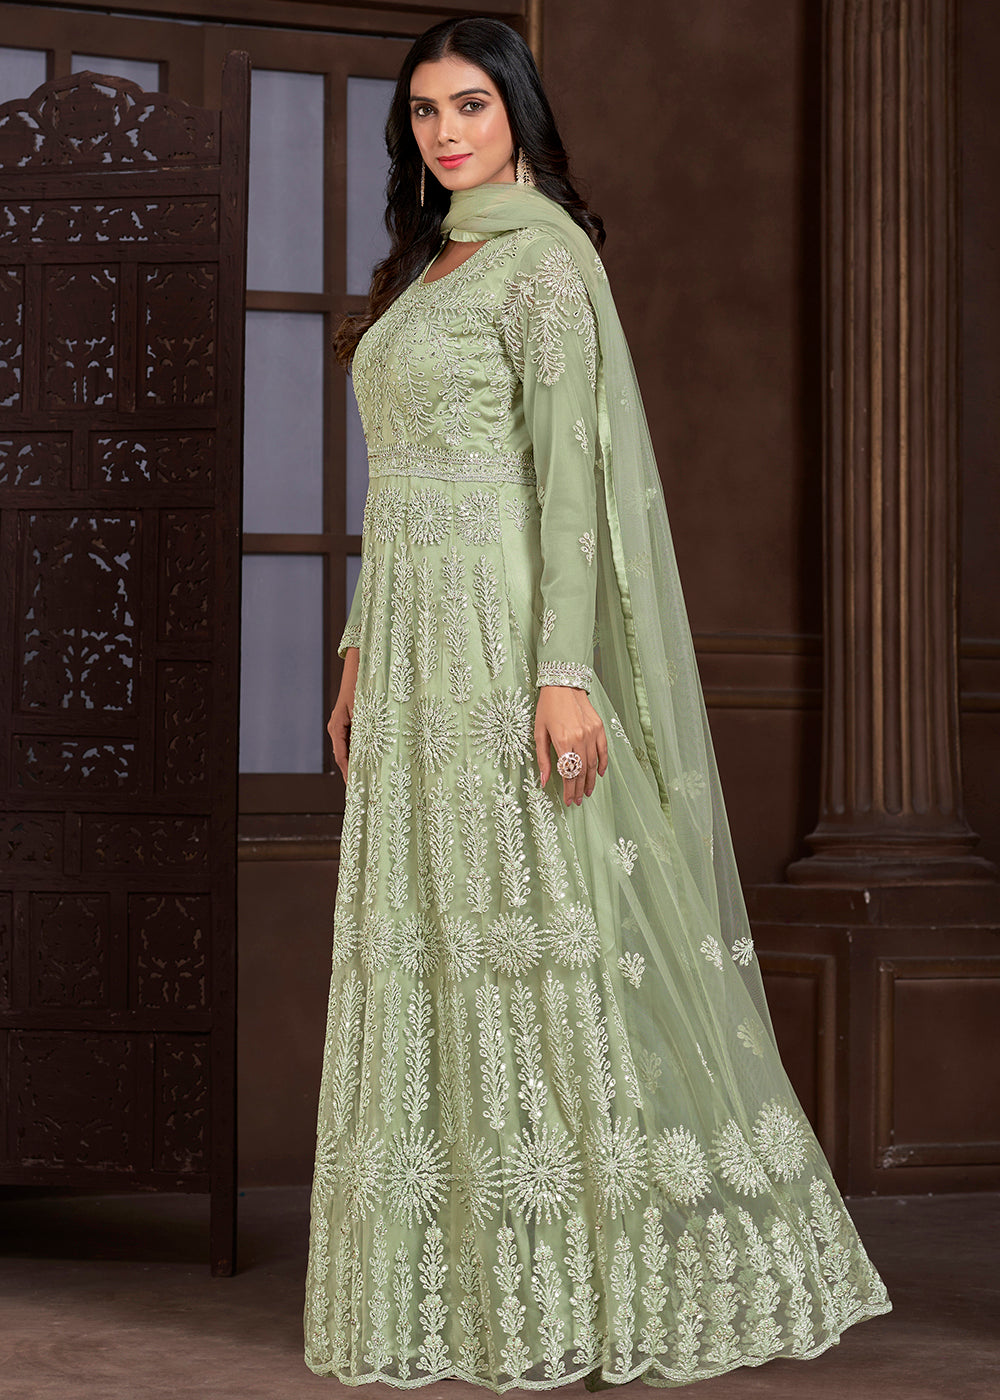 Buy Now Elegant Green Butterfly Net Designer Anarkali Suit Online in USA, UK, Australia, New Zealand, Canada & Worldwide at Empress Clothing.